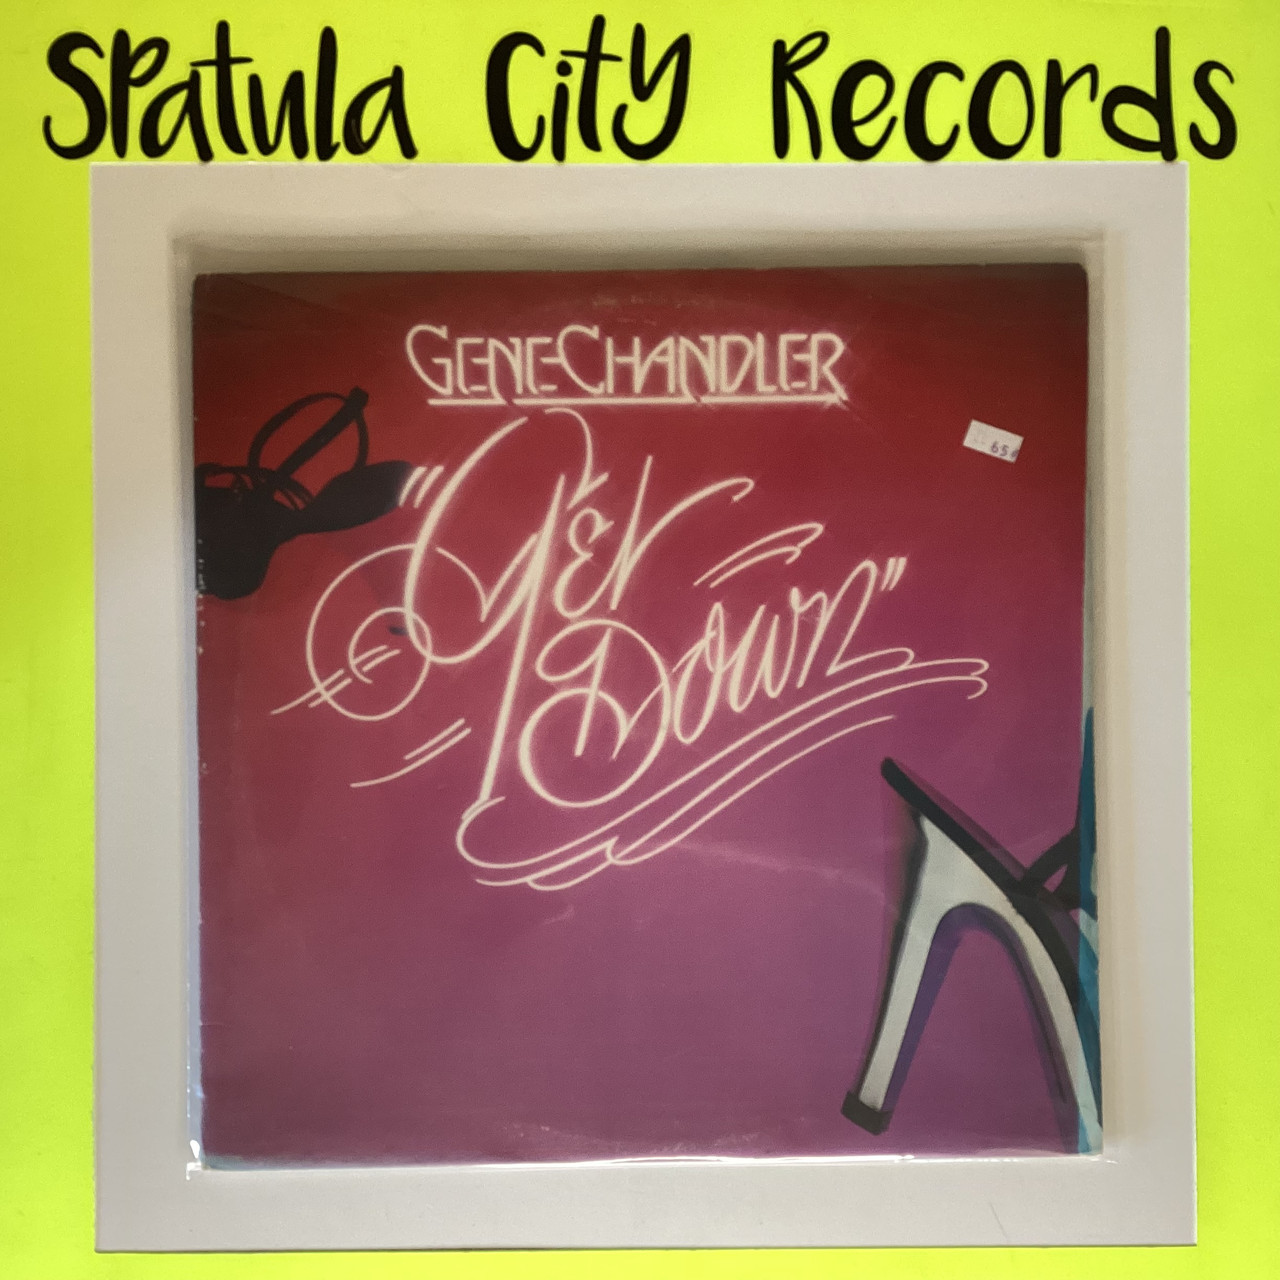 Gene Chandler - Get Down - vinyl record album LP